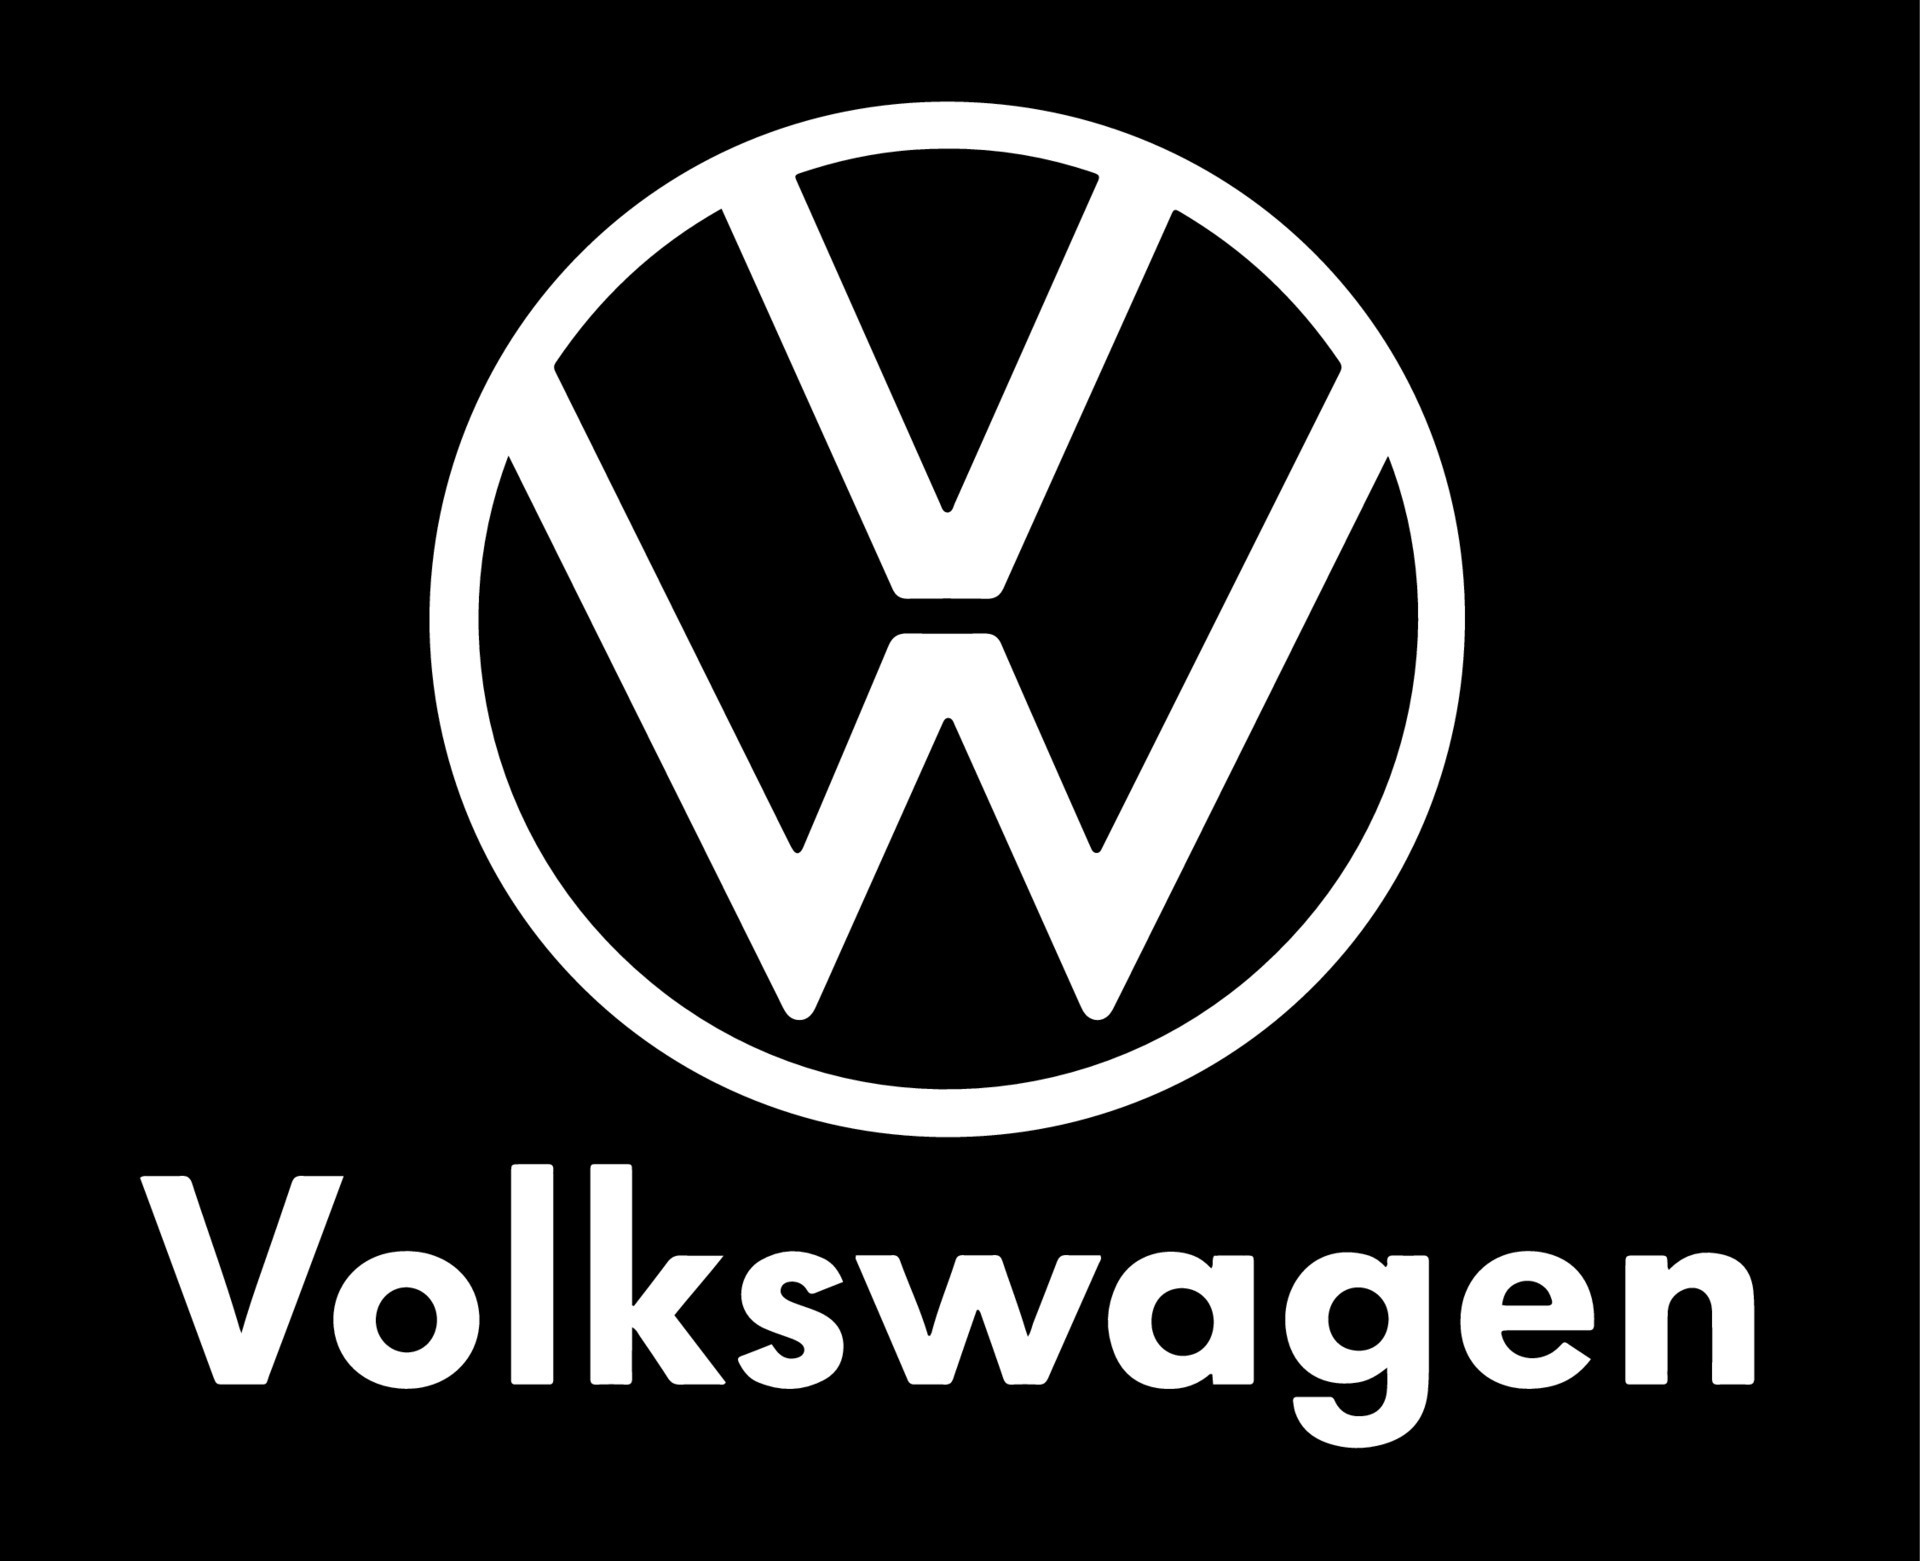 volkswagen logo marque voiture symbole avec Nom blanc conception